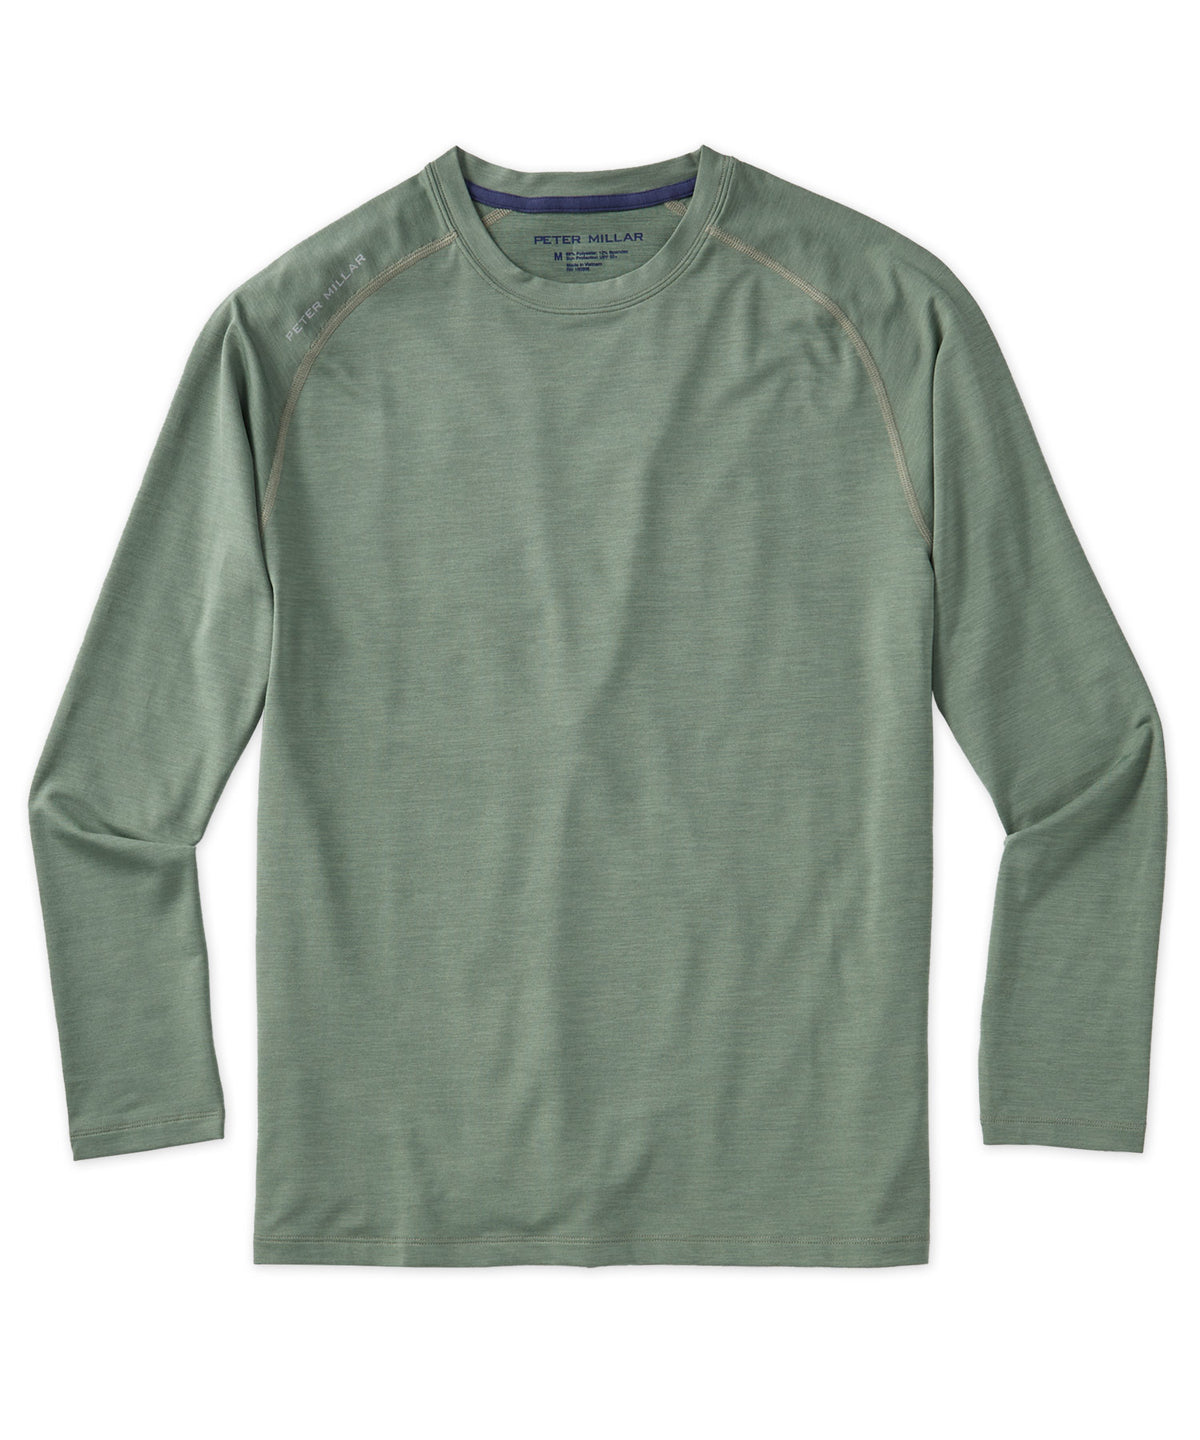 Peter Millar Active Performance Long-Sleeve T-Shirt